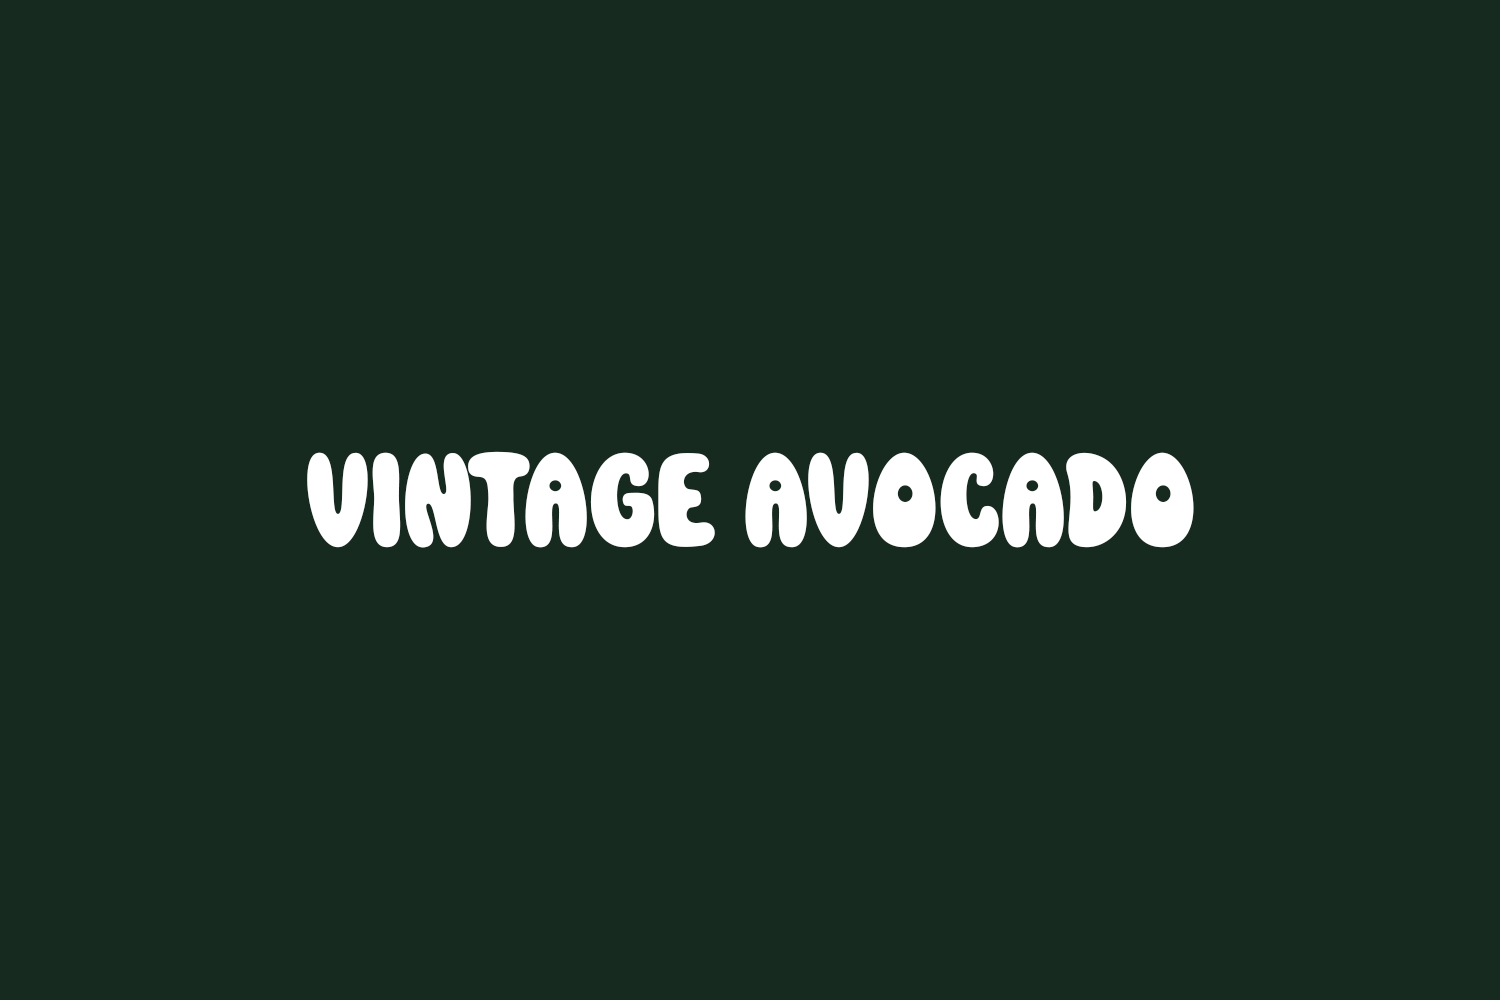 Vintage Avocado Free Font